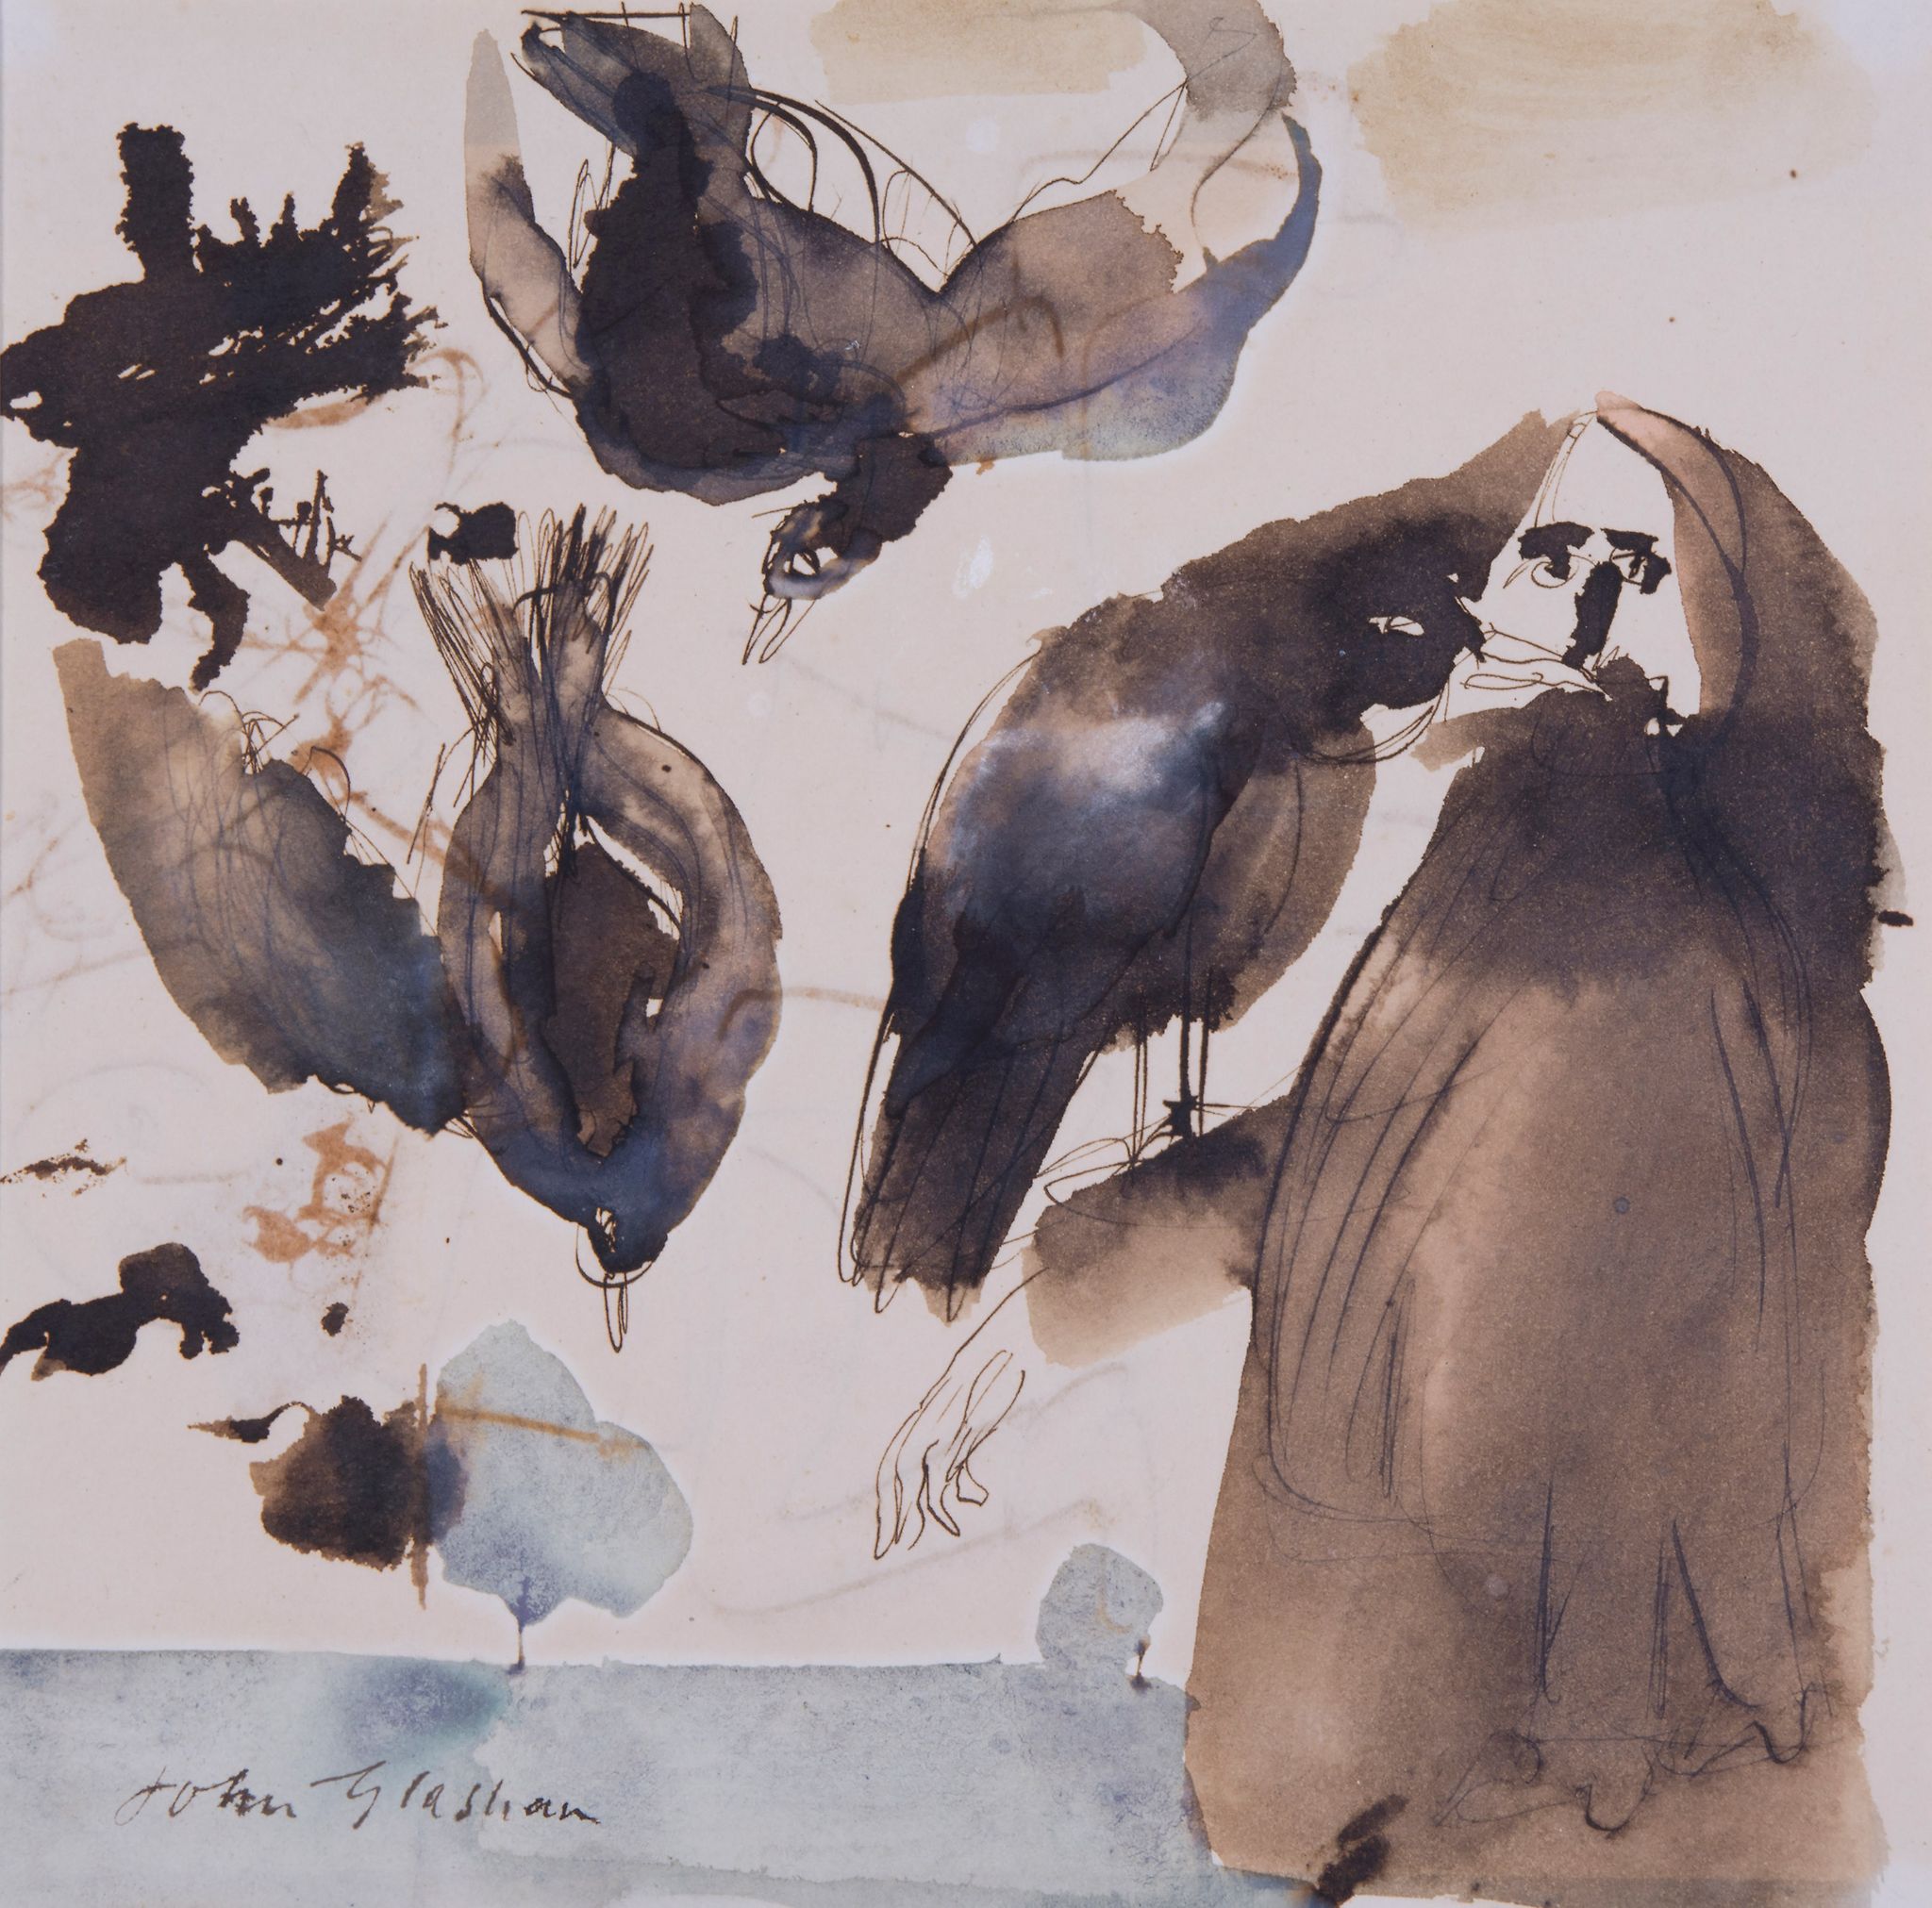 Glashan (John) - Bearded figure with crows, characteristic original cartoon artwork,   pen and ink